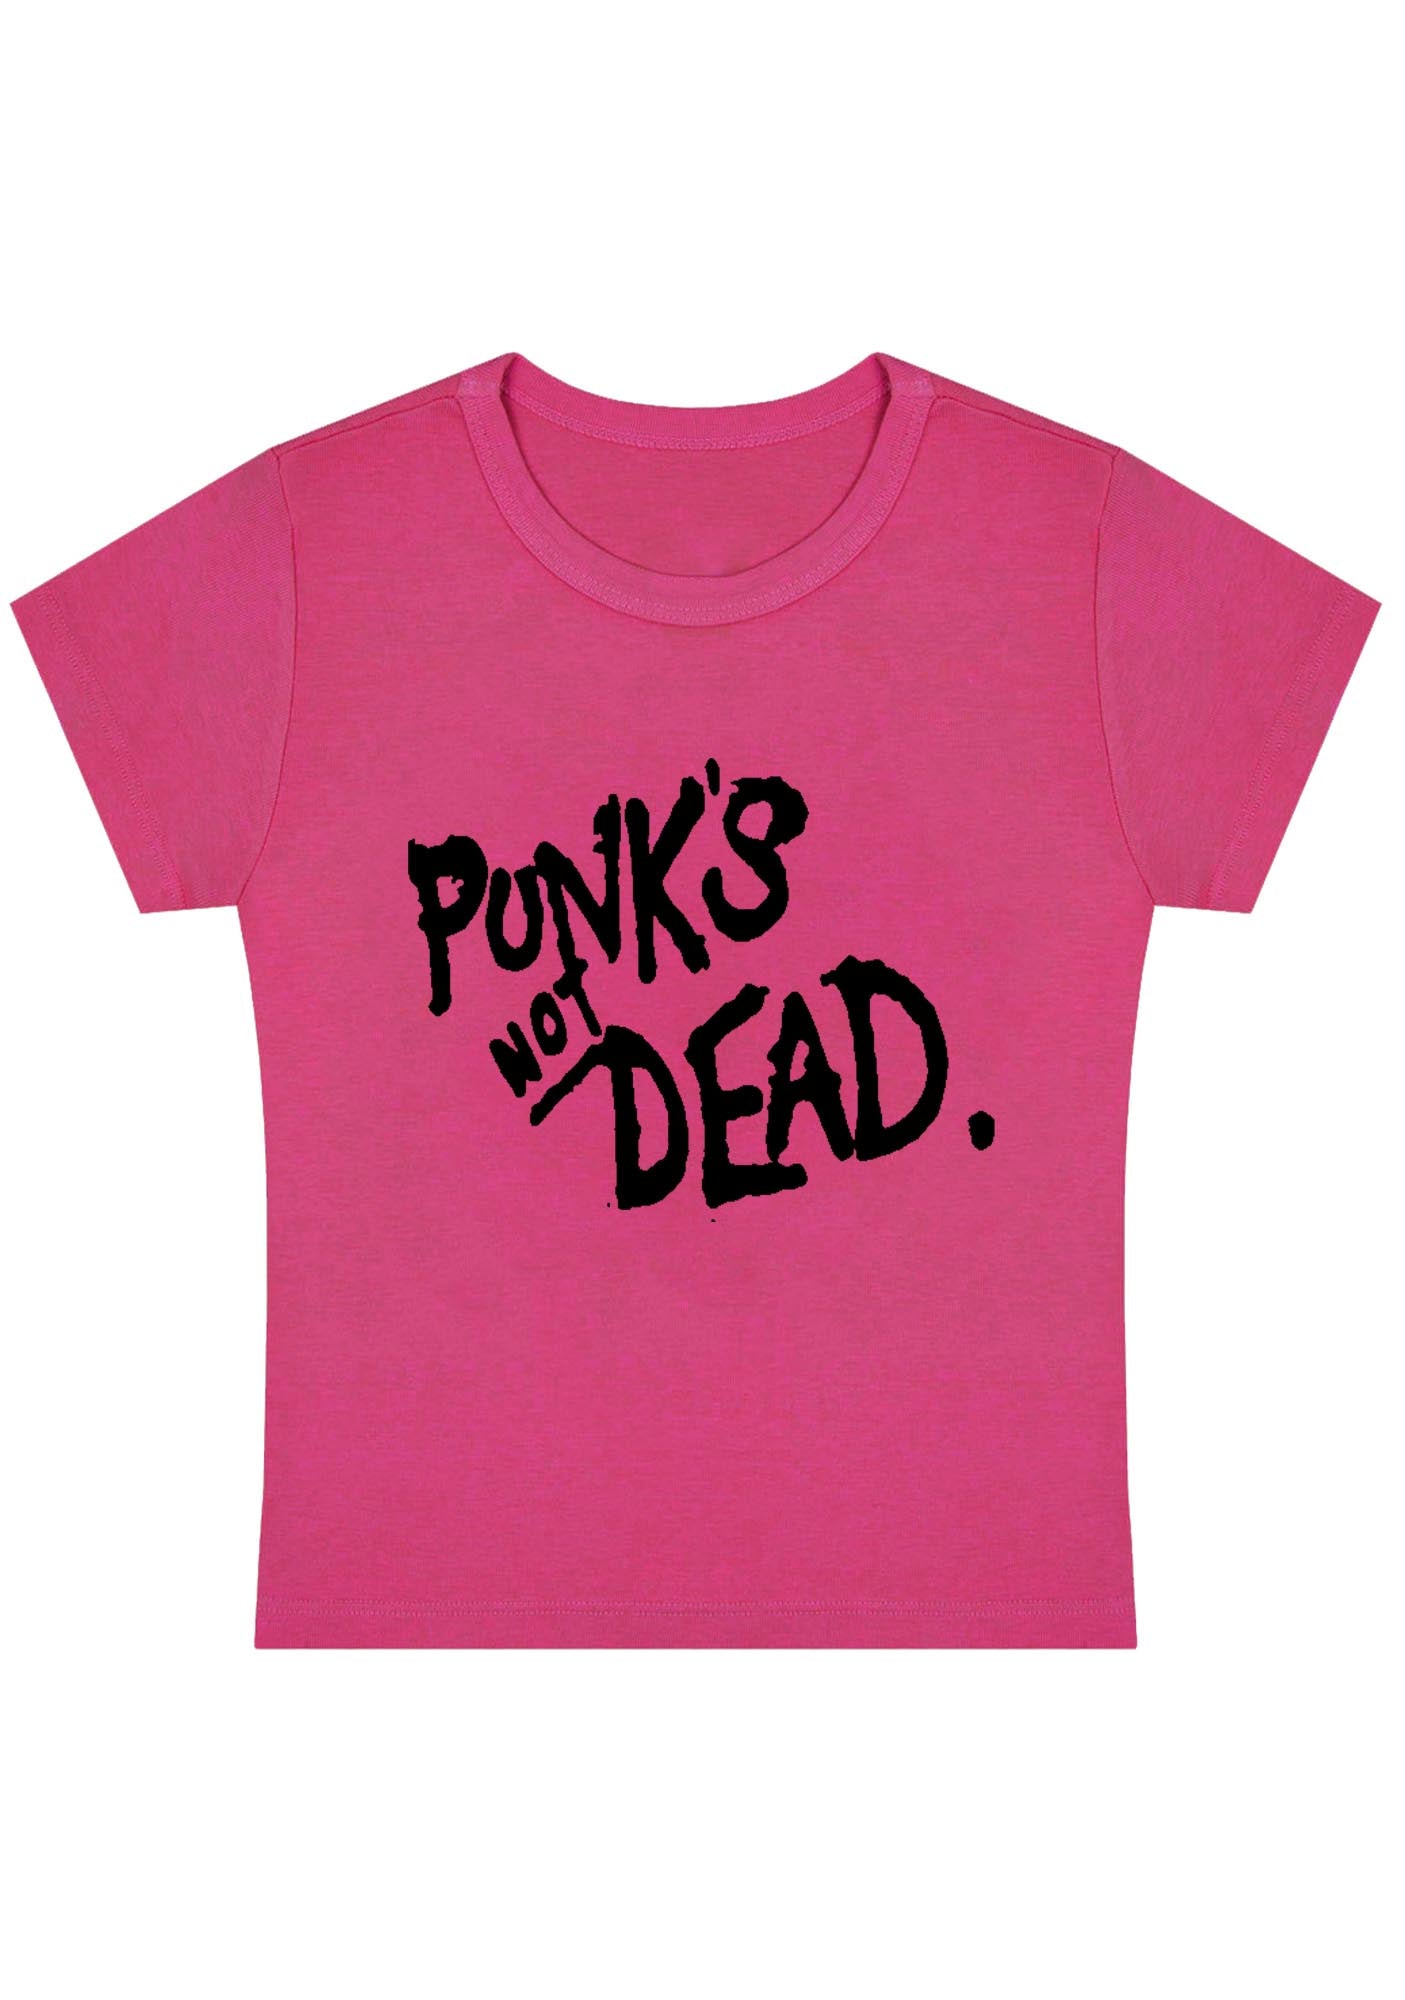 Punk's Not Dead Y2K Baby Tee